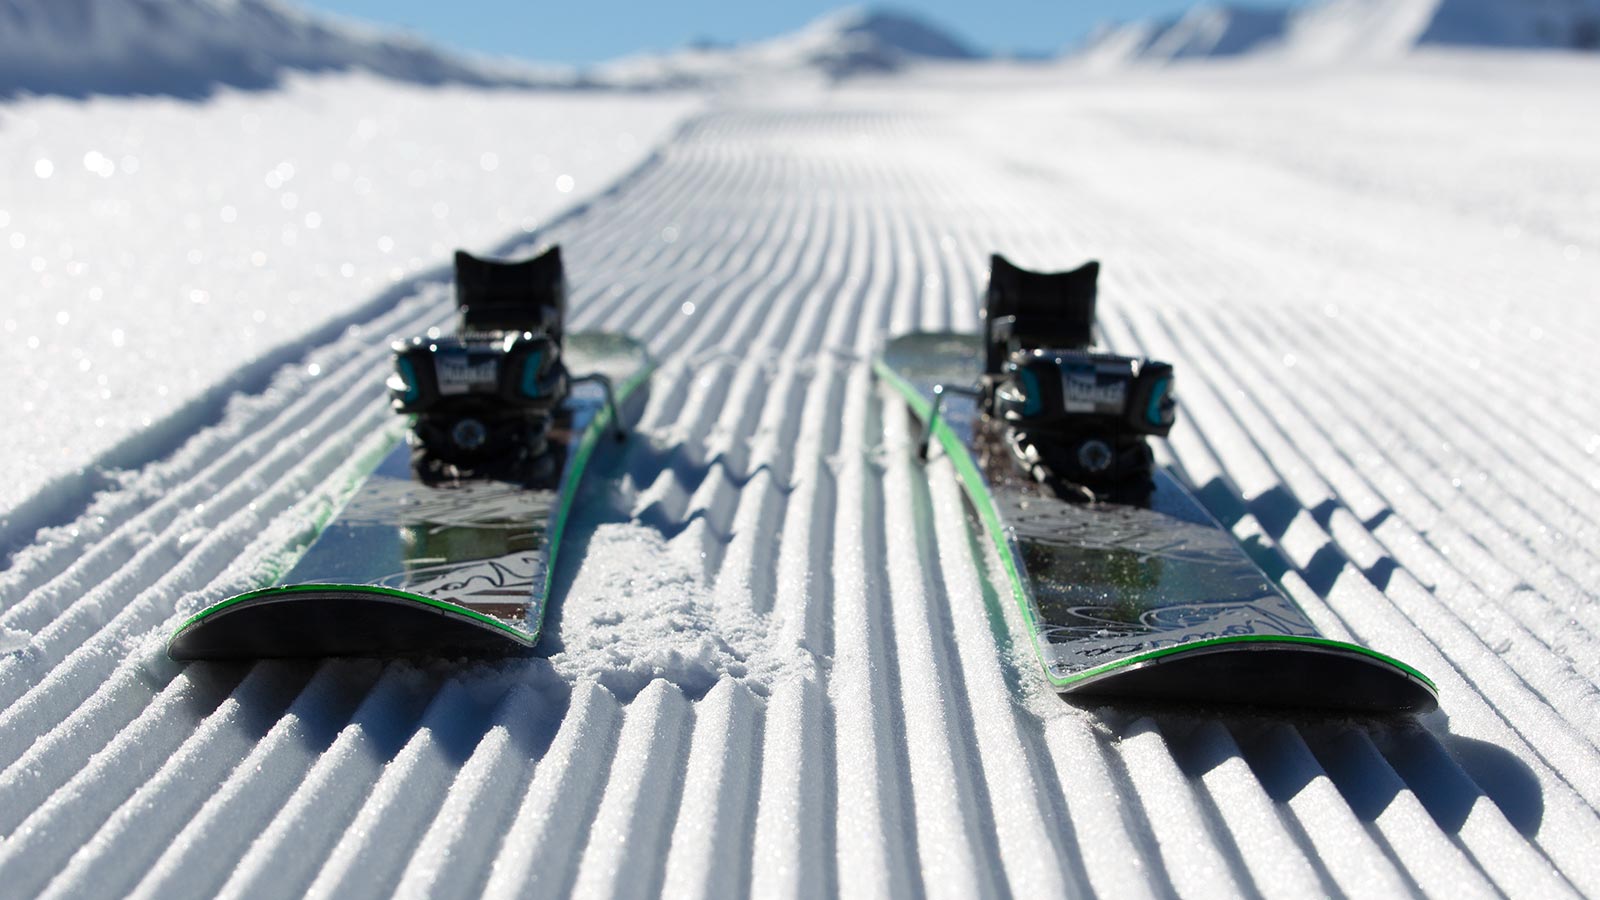 Snowboard on snow near mountain lodge